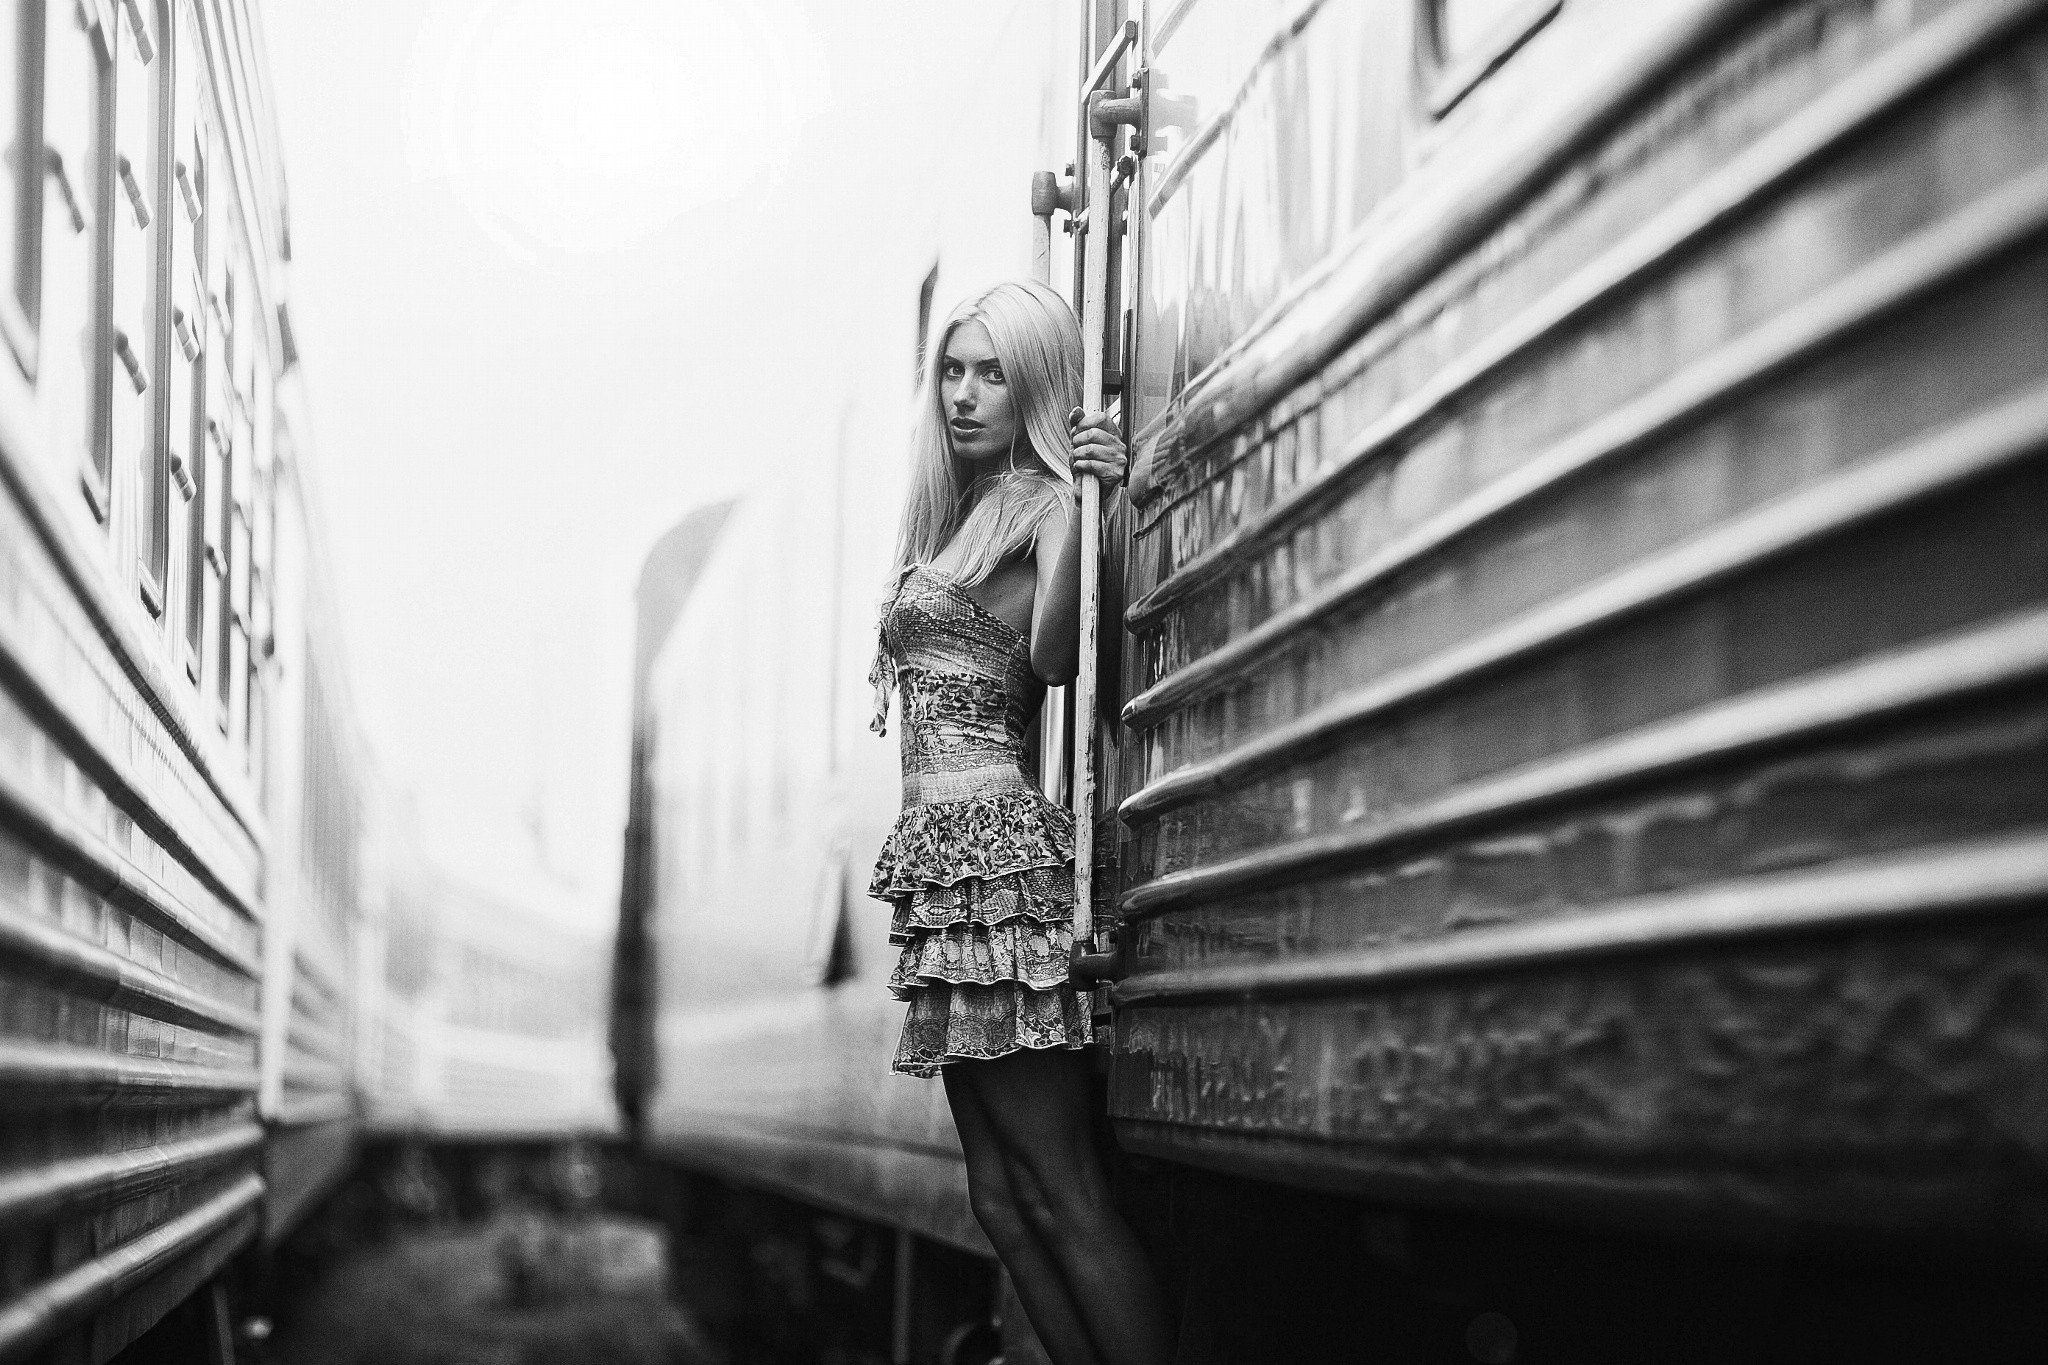 People 2048x1365 monochrome women model train vehicle blonde dress looking at viewer women outdoors outdoors